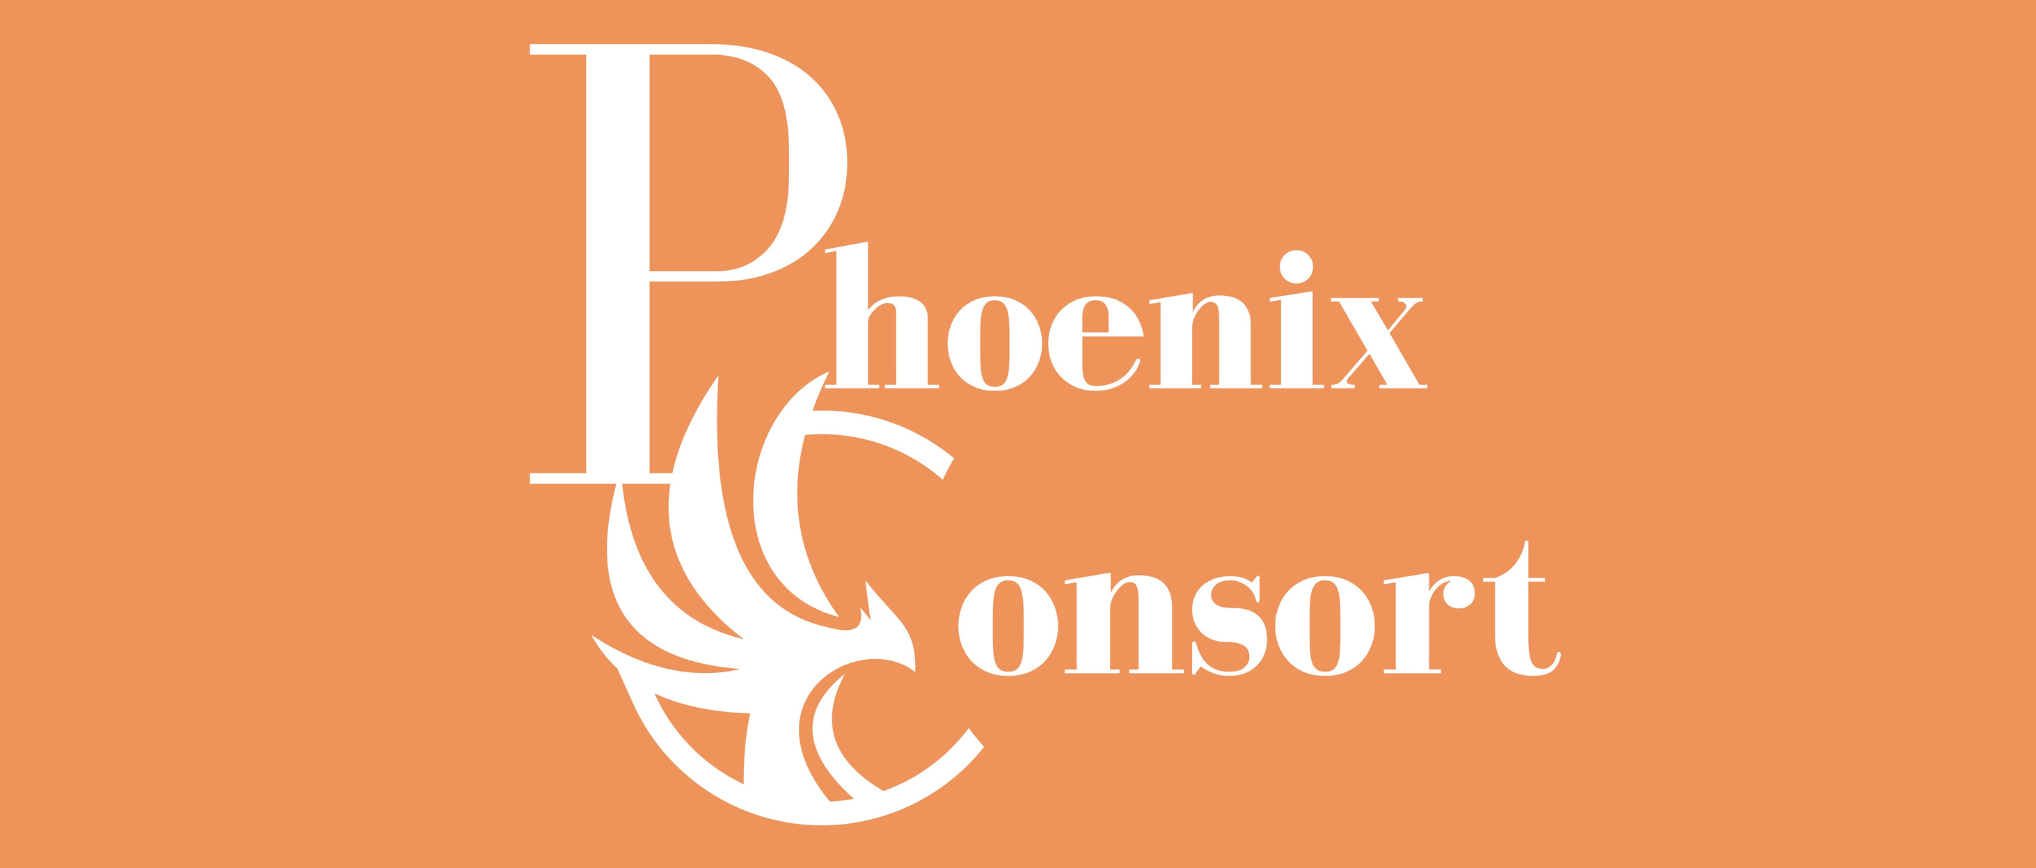 Phoenix Consort